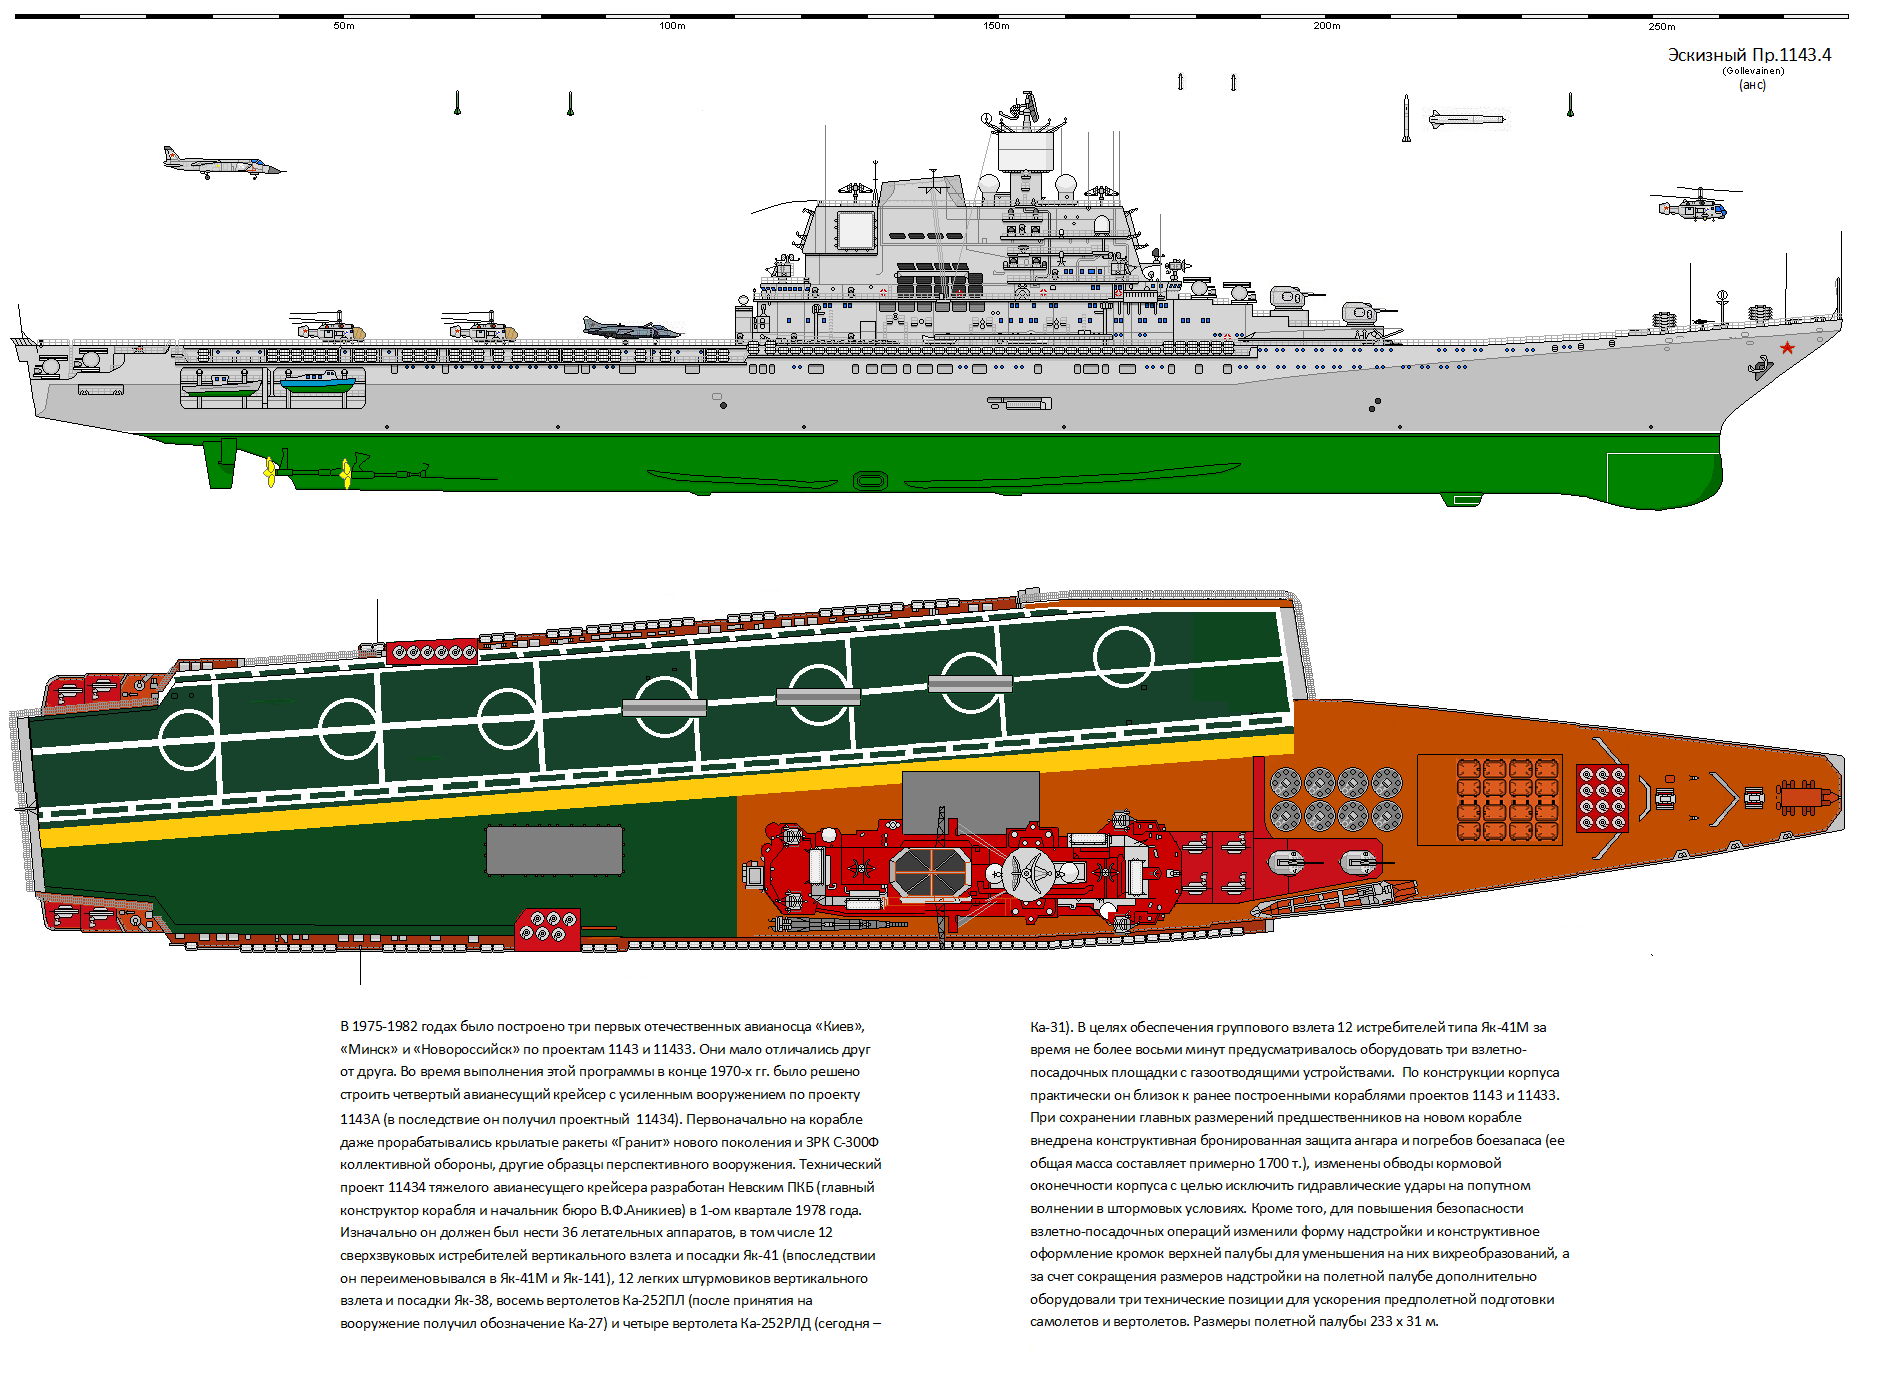 Проект 1135 (тип «буревестник») и 11351 (тип «нерей») — сторожевые корабли